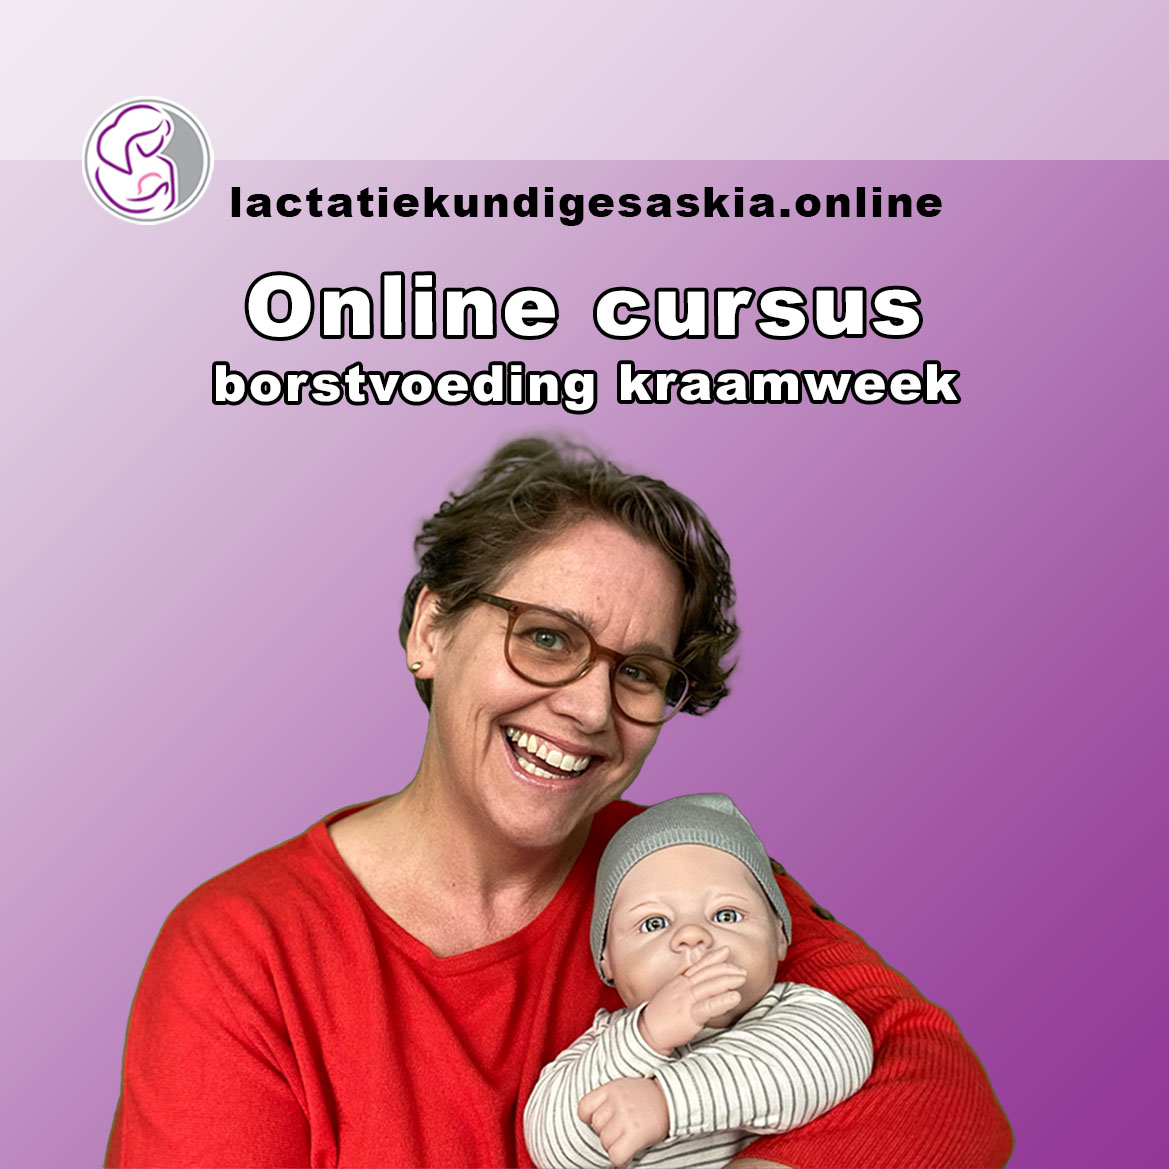 Online cursus borstvoeding kraamweek